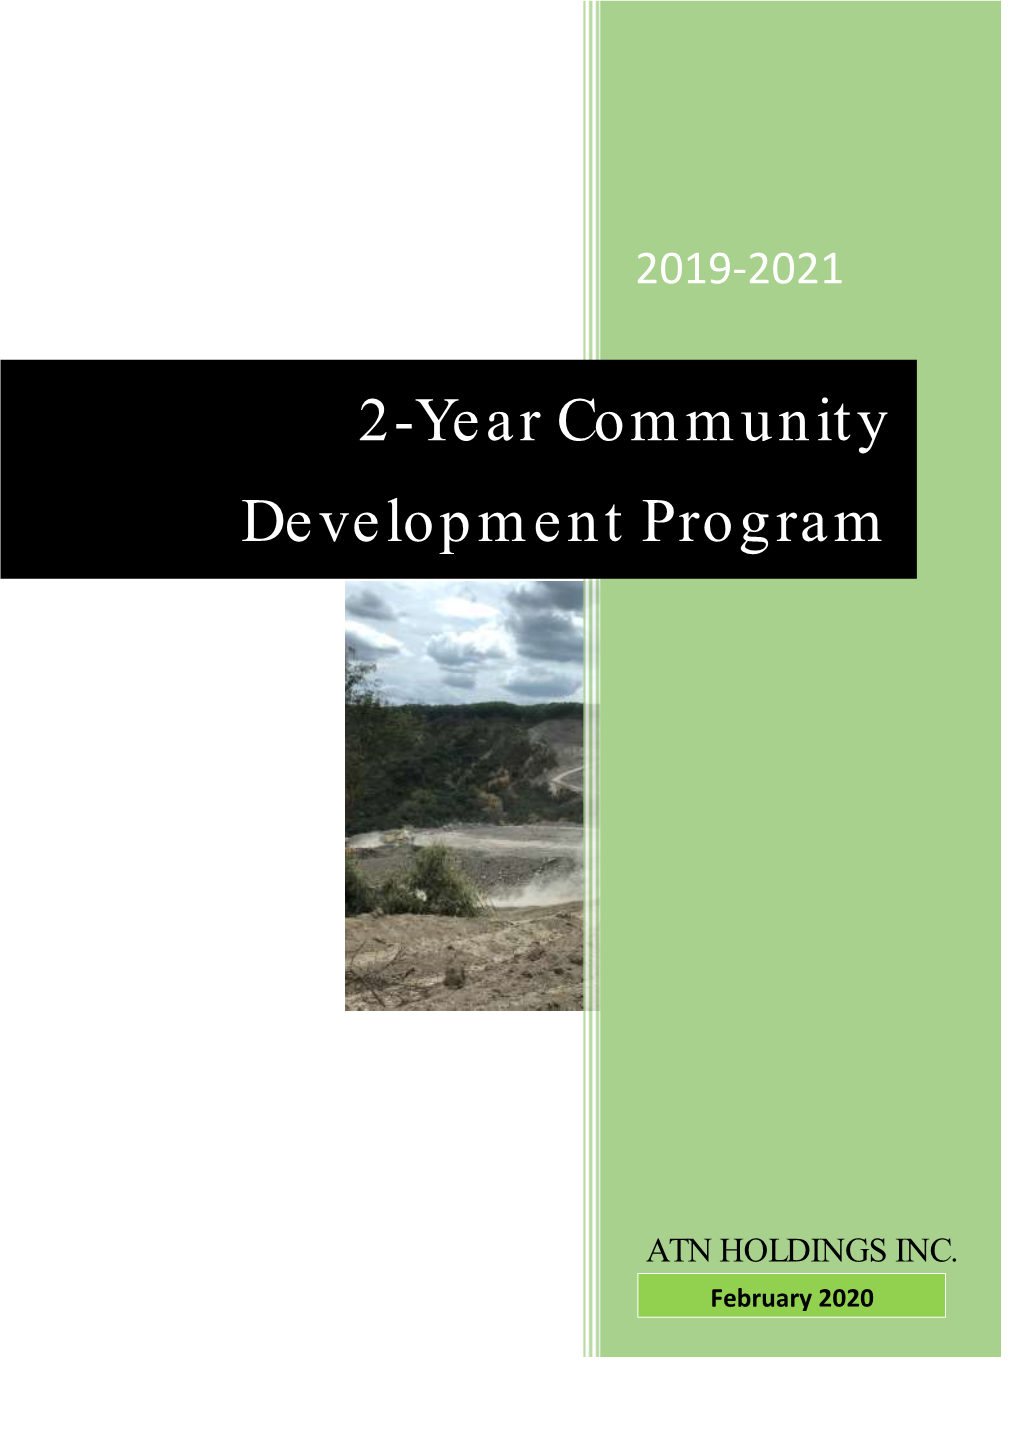 2-Year Community Development Program